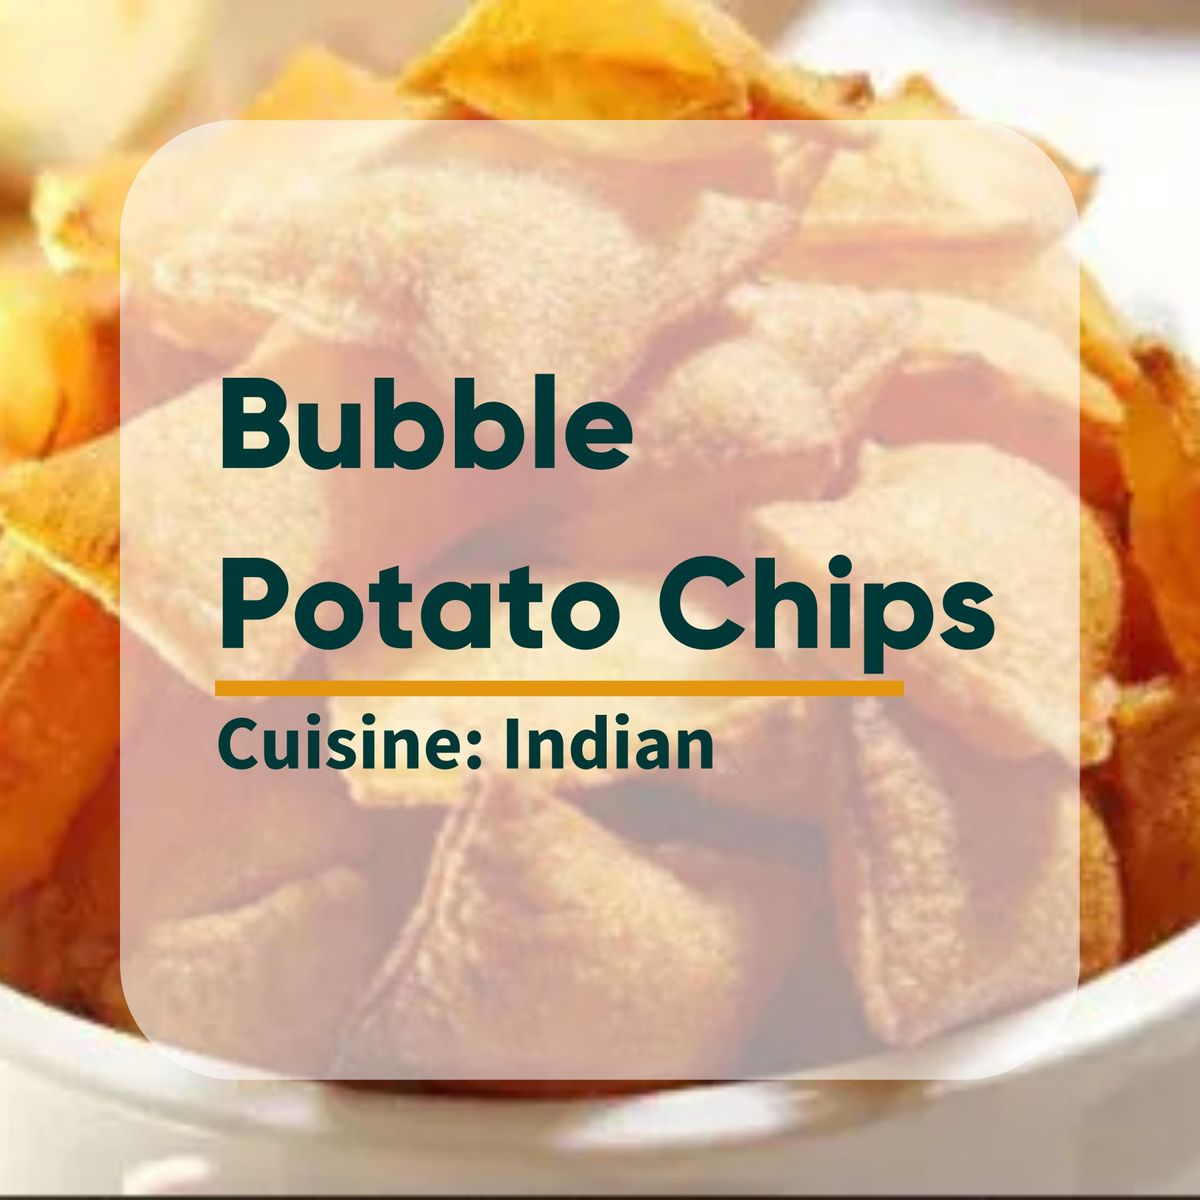 Bubble Potato Chips Image